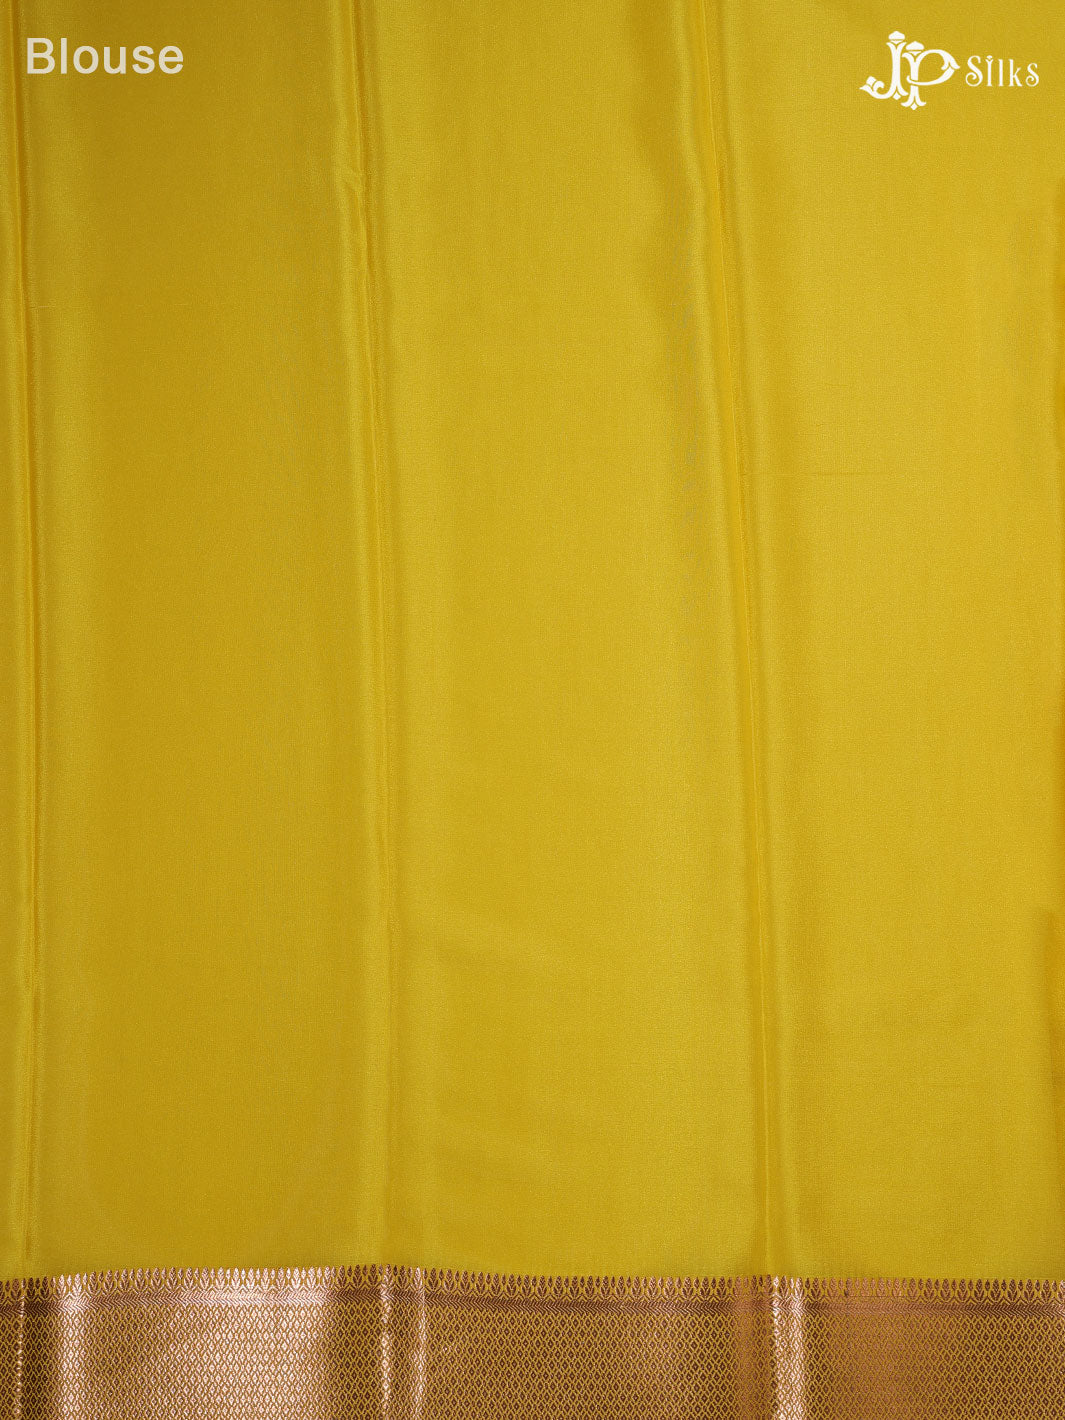 Lemon Yellow Mysore Silk Saree - D4807 - View 2